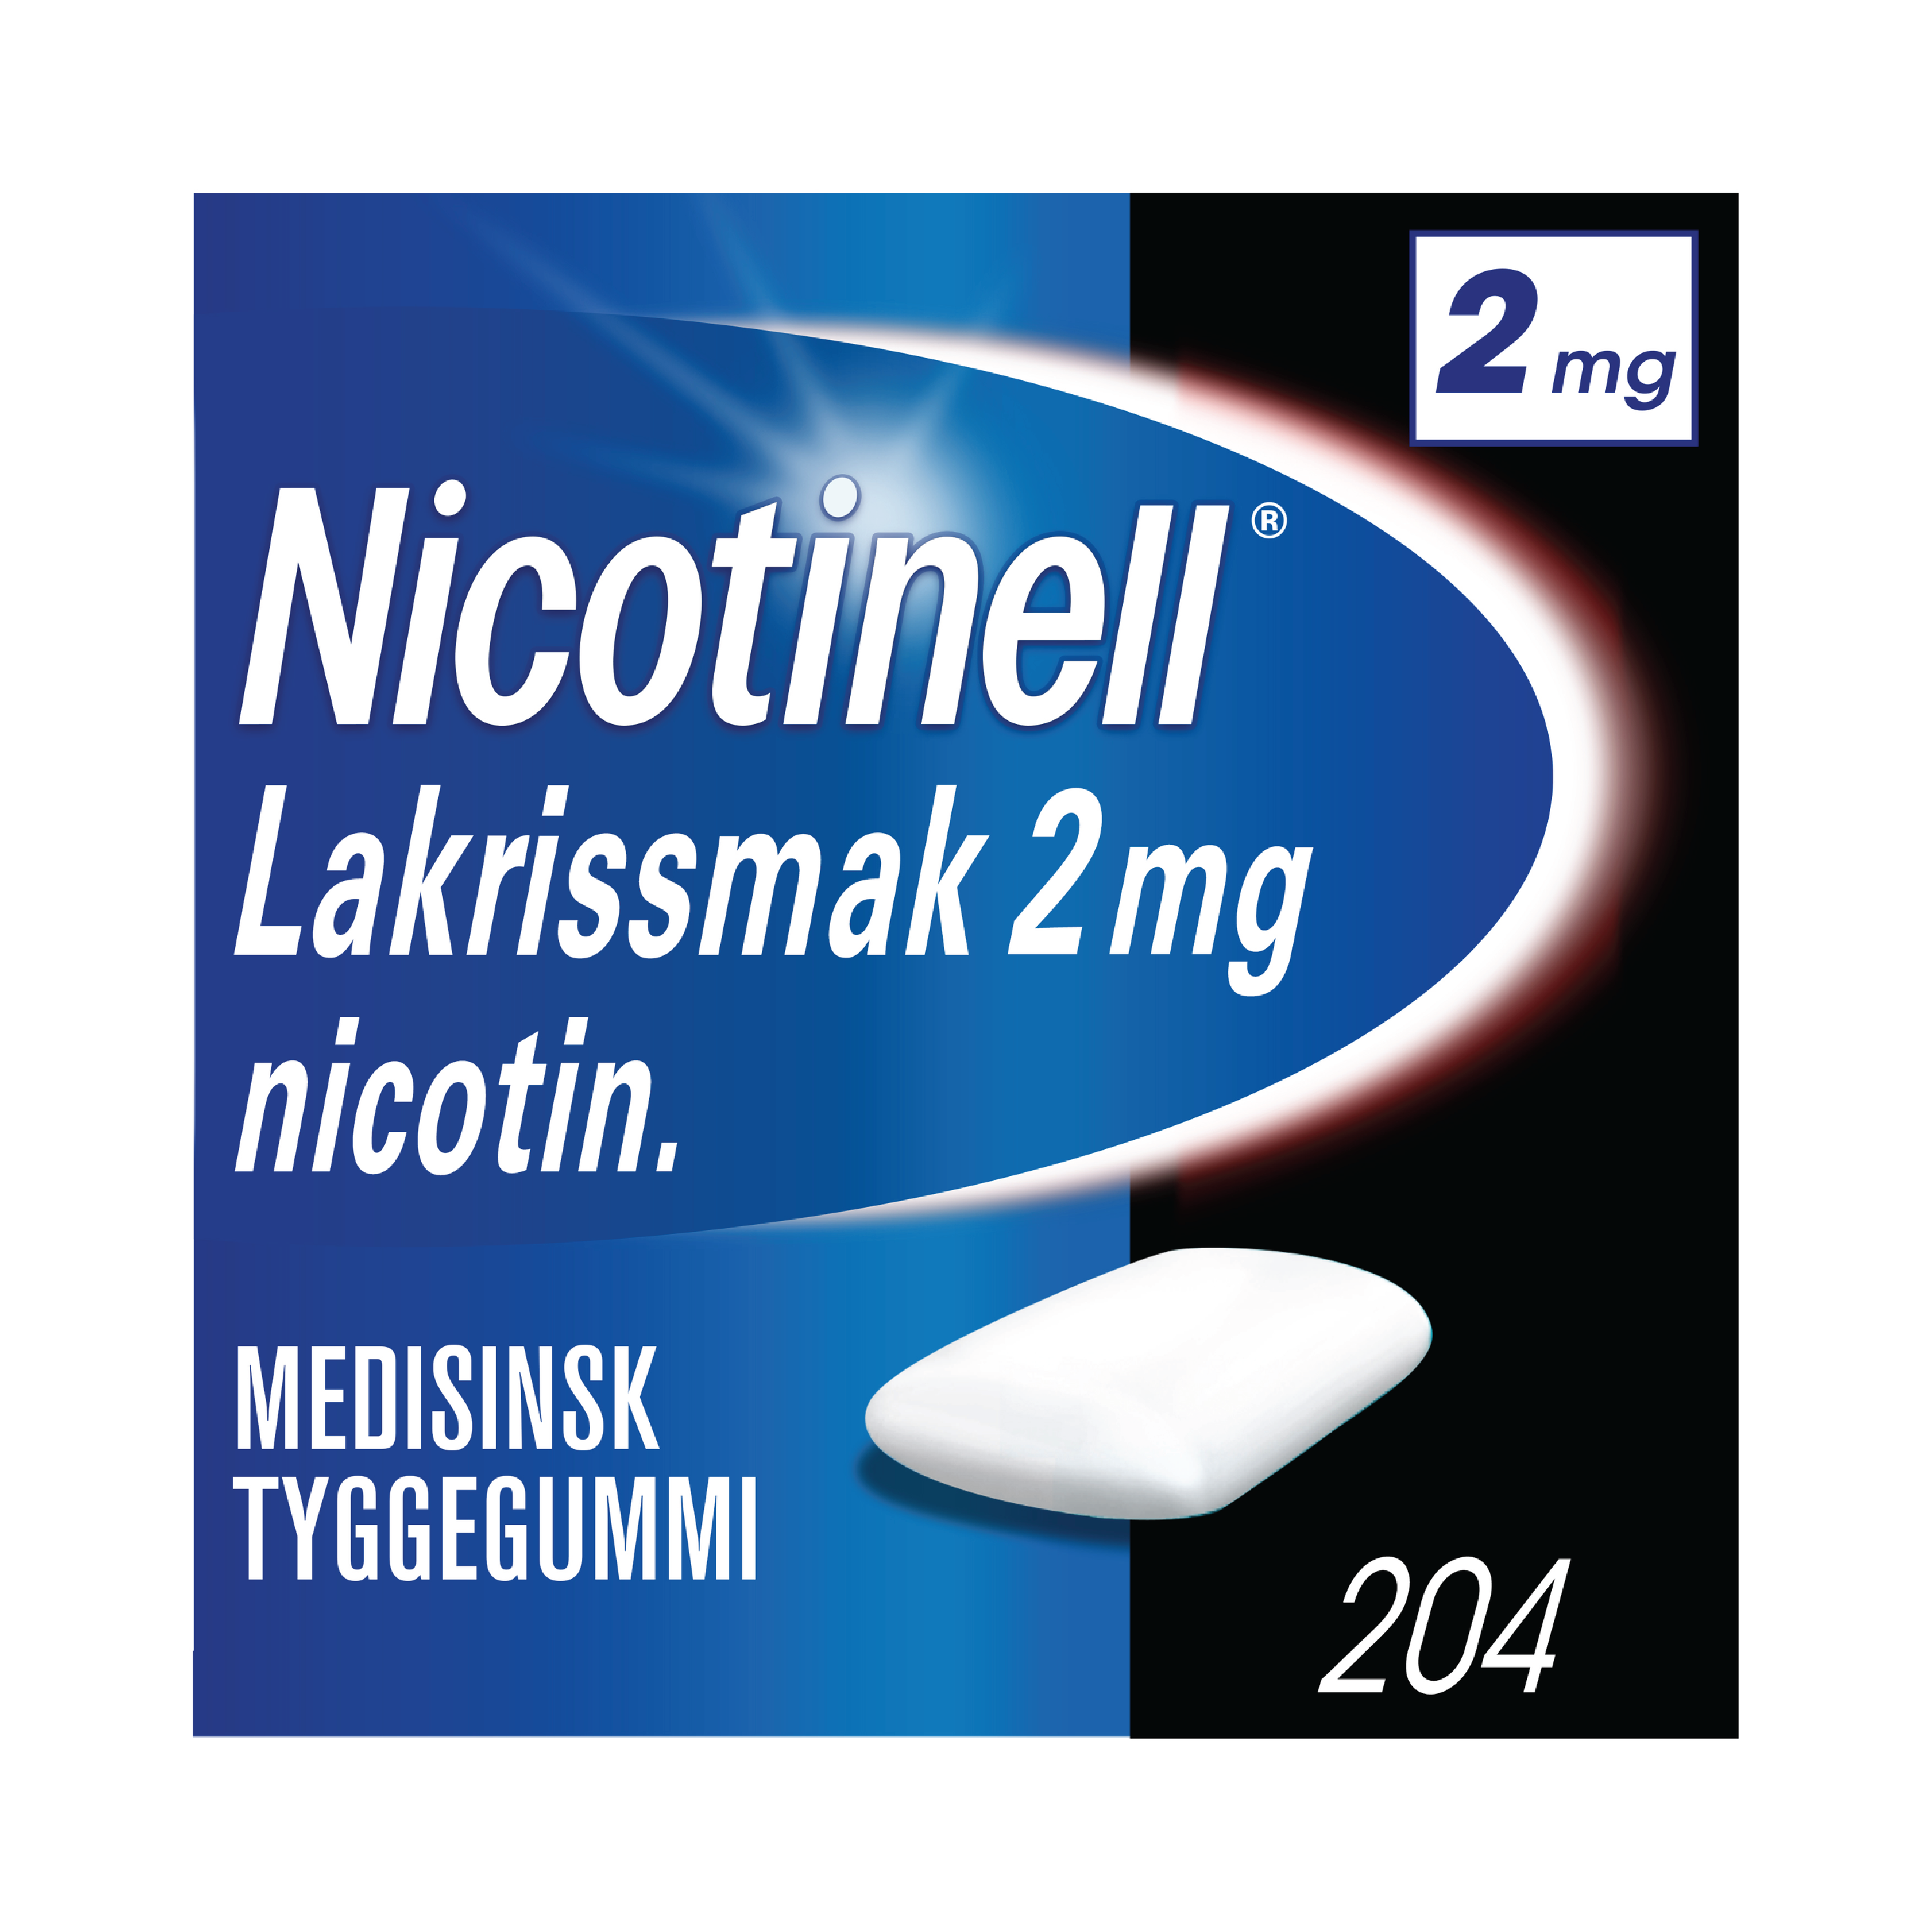 Nicotinell Tyggegummi 2mg lakris, 204 stk.